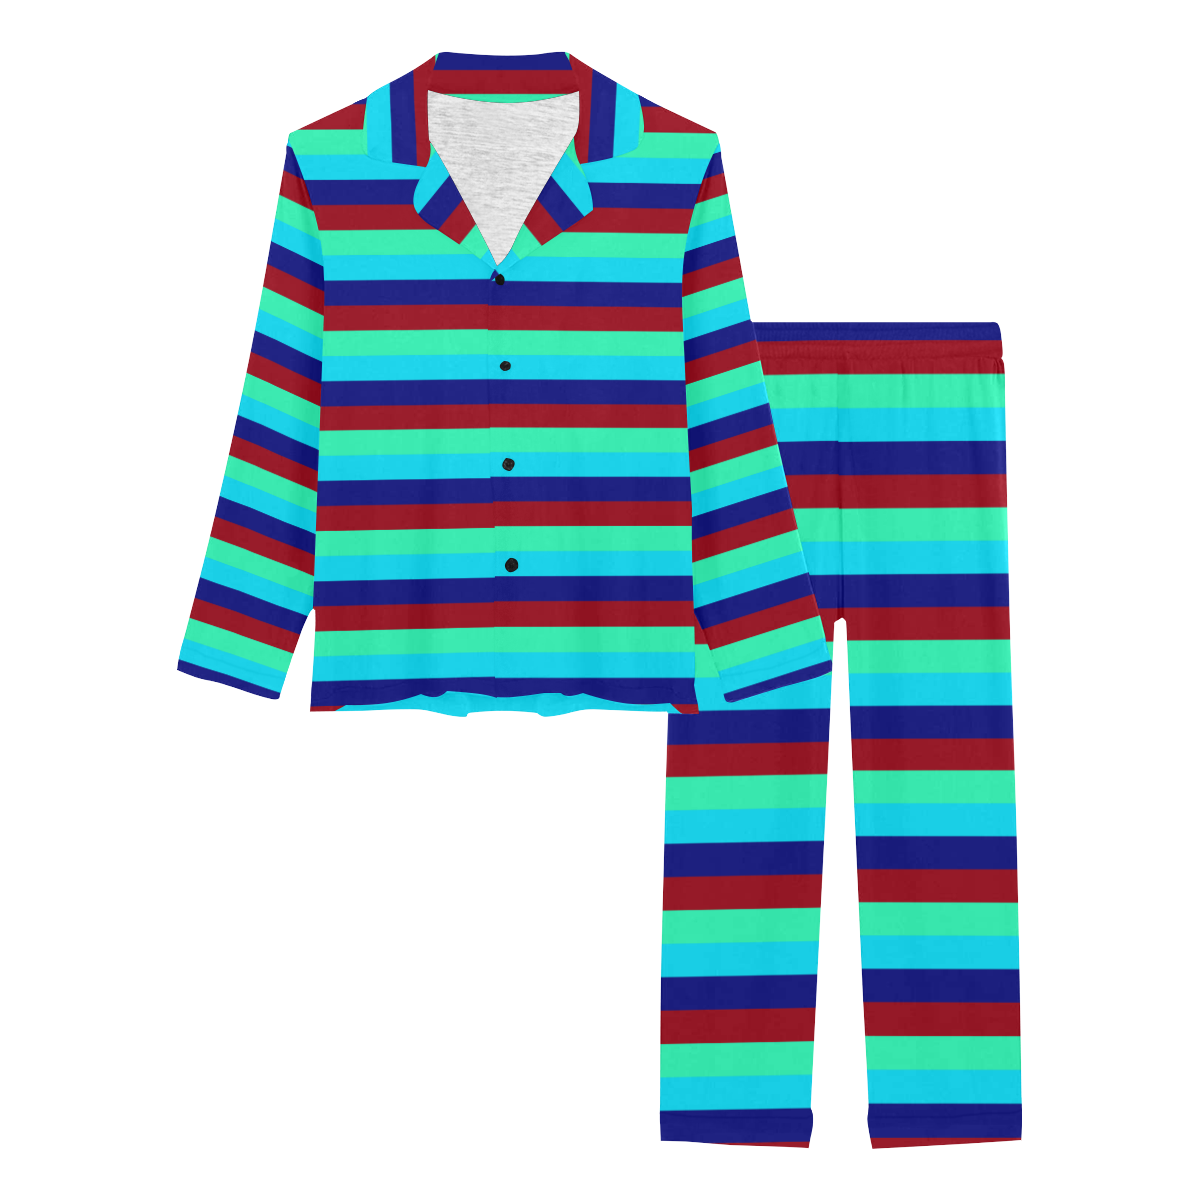 Caribbean Summer Style Blue Lines Pattern Women's Long Pajama Set